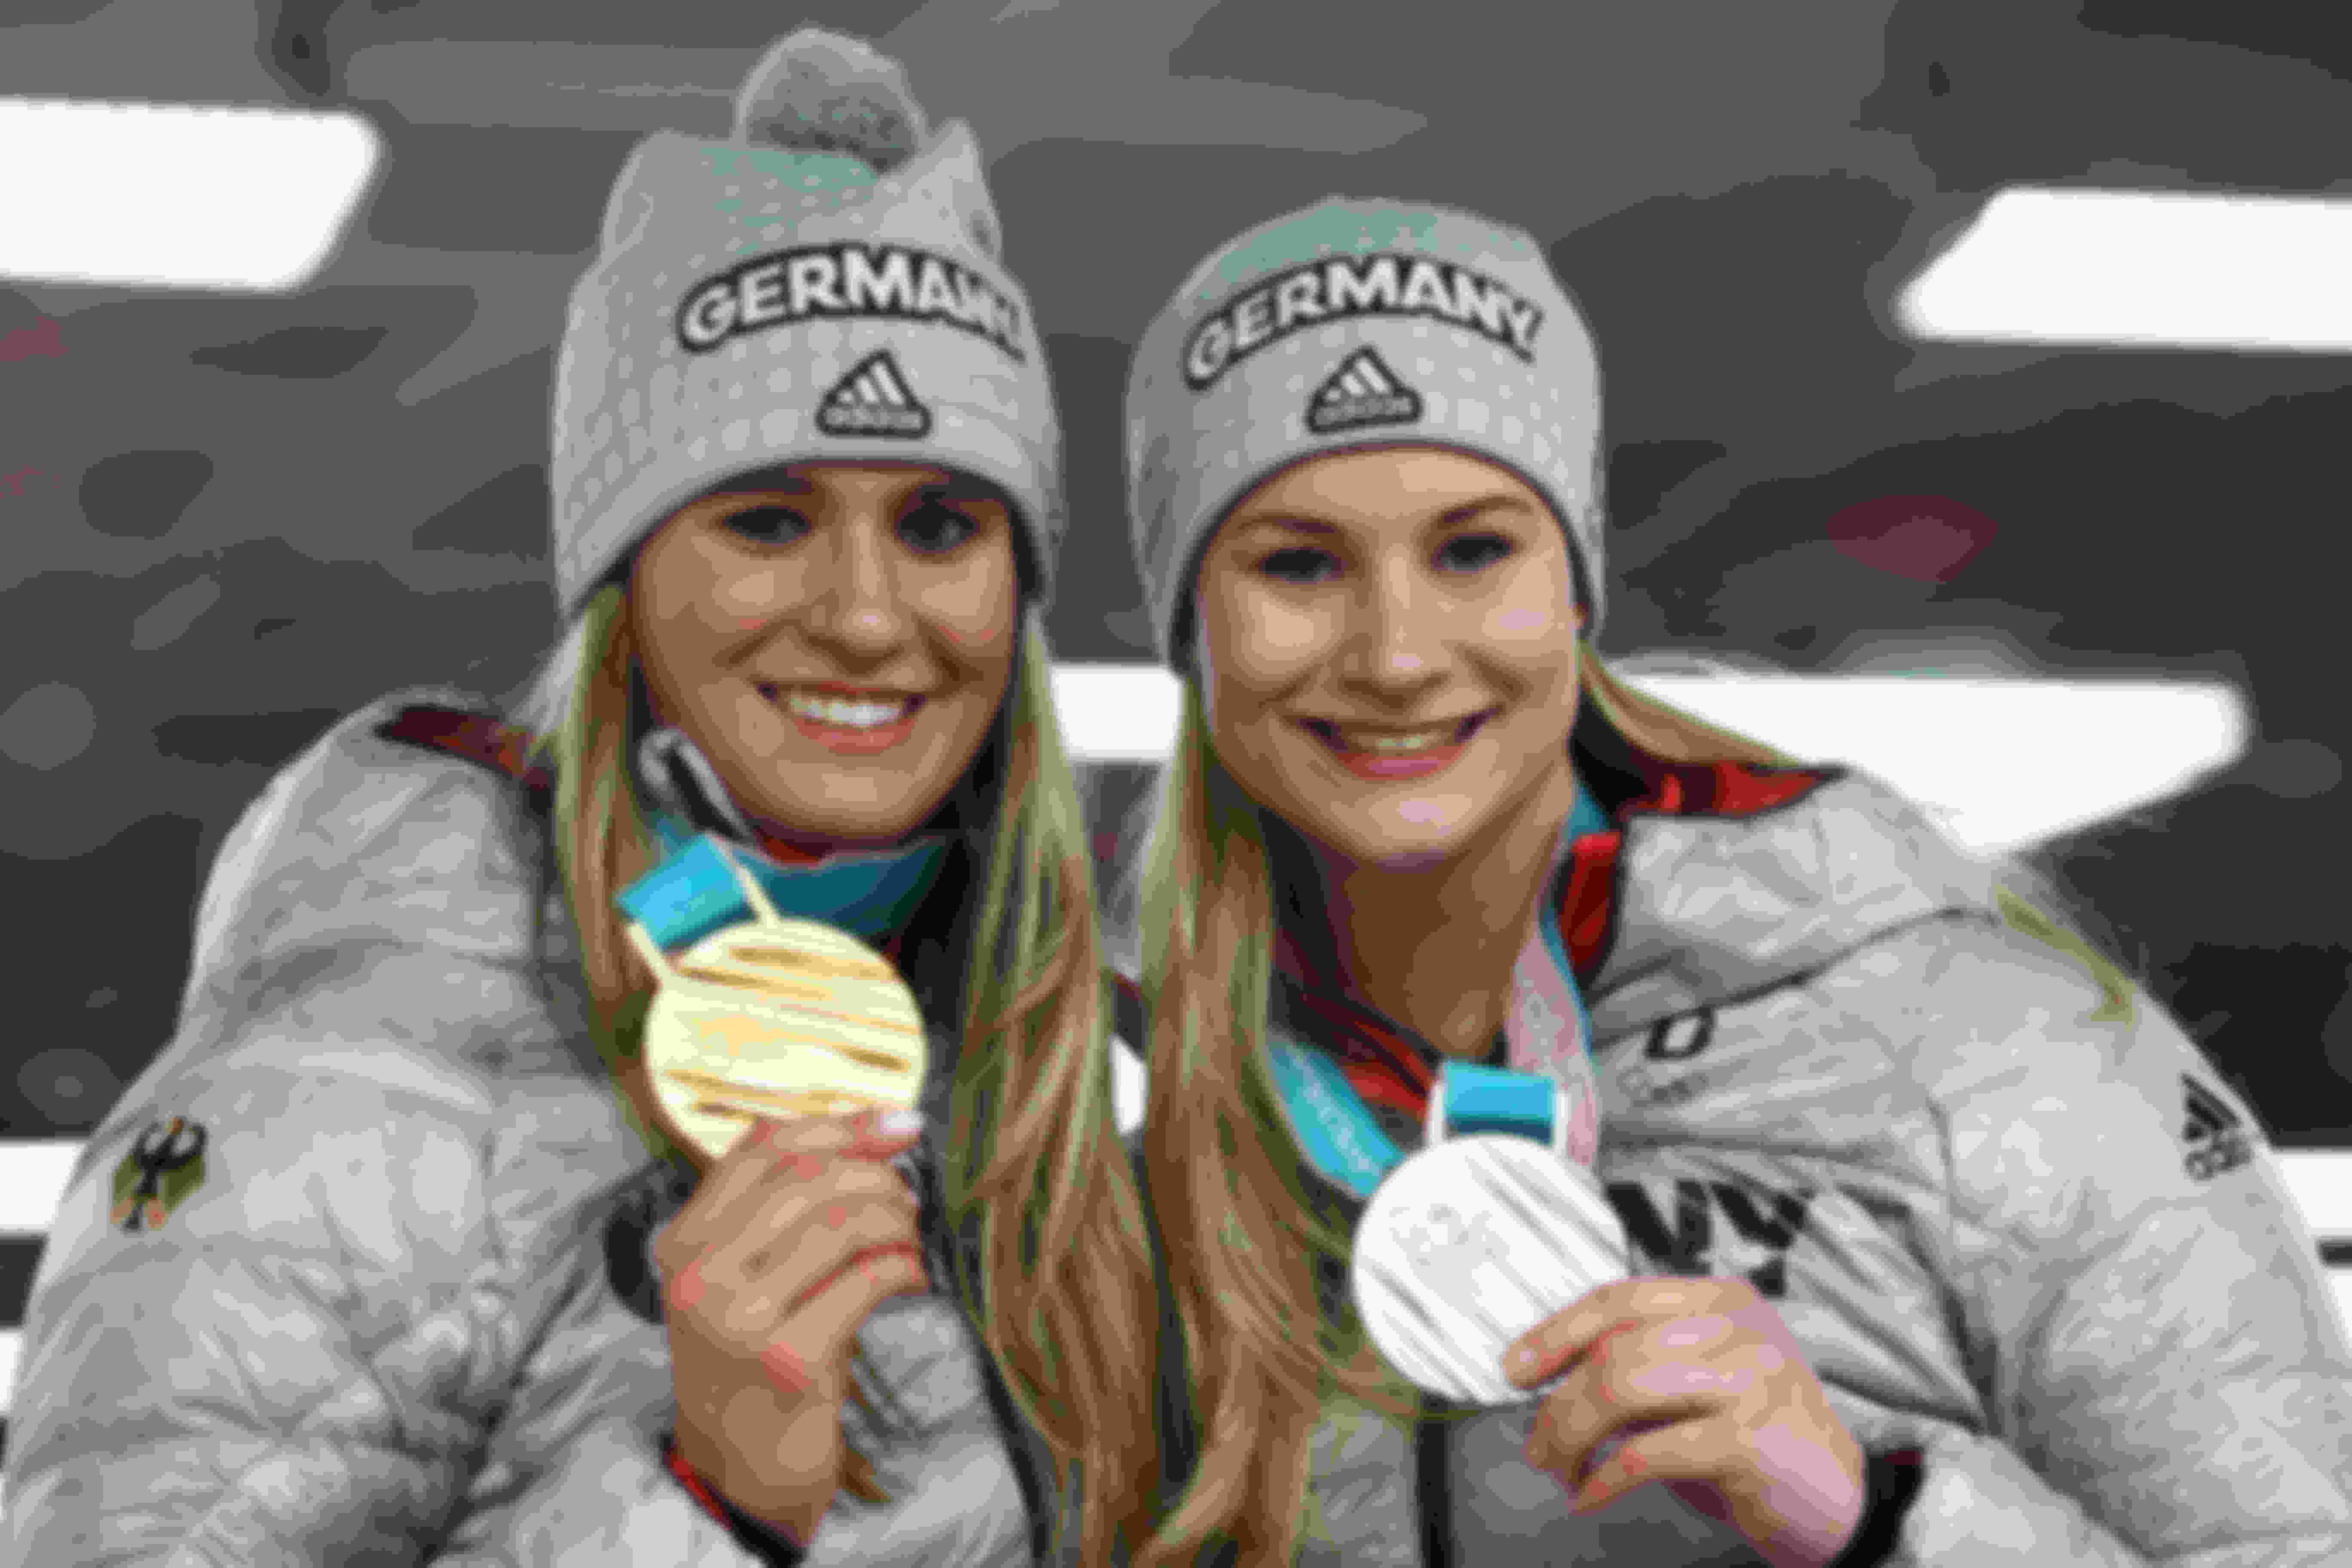 Geisenberger y Eitberger, oro y plata de luge femenino en PyeongChang 2018.